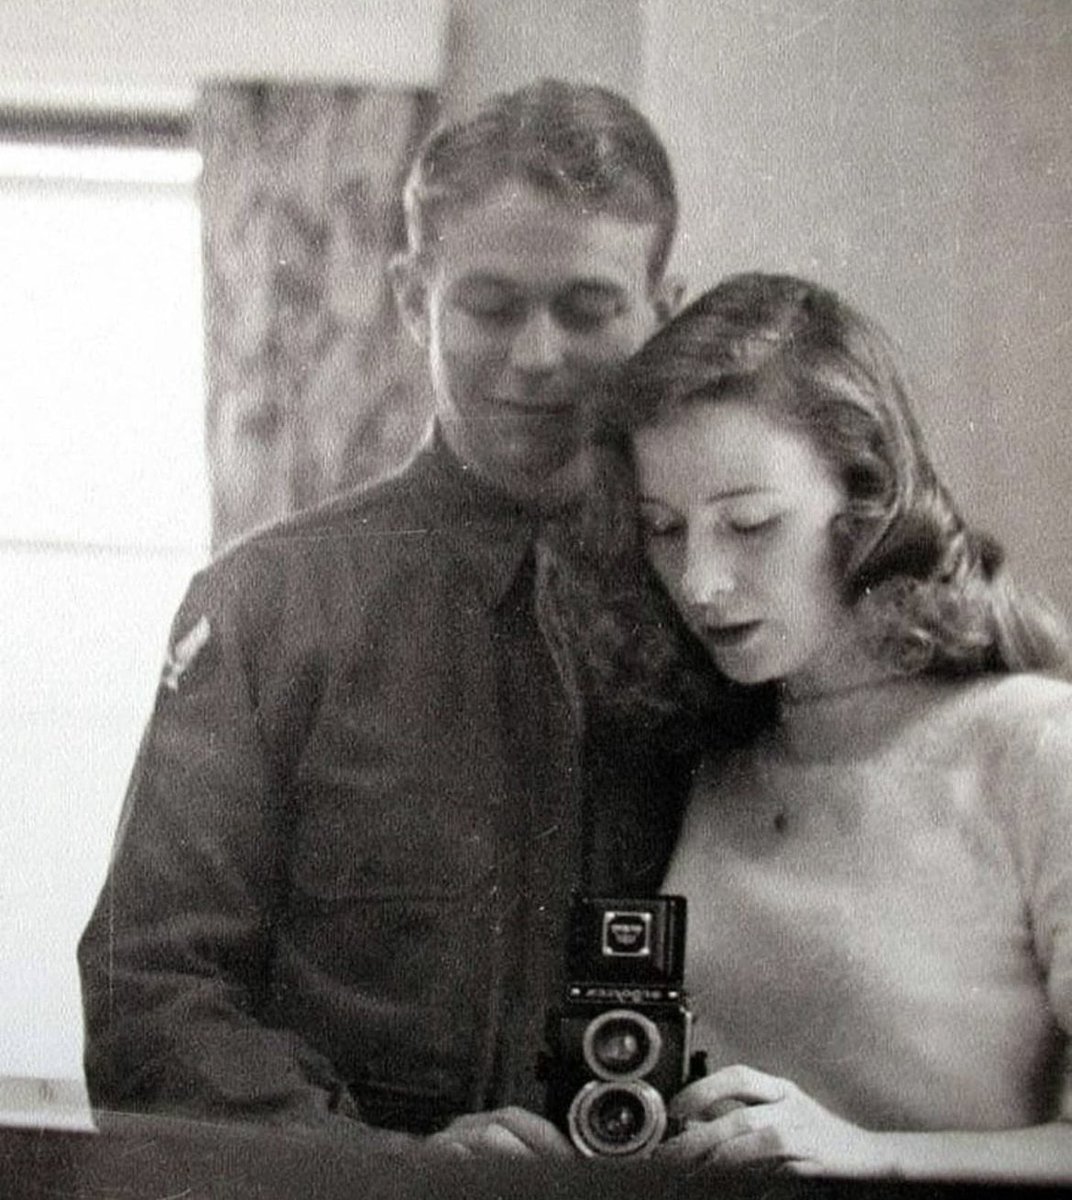 Mirror selfie from 1940s